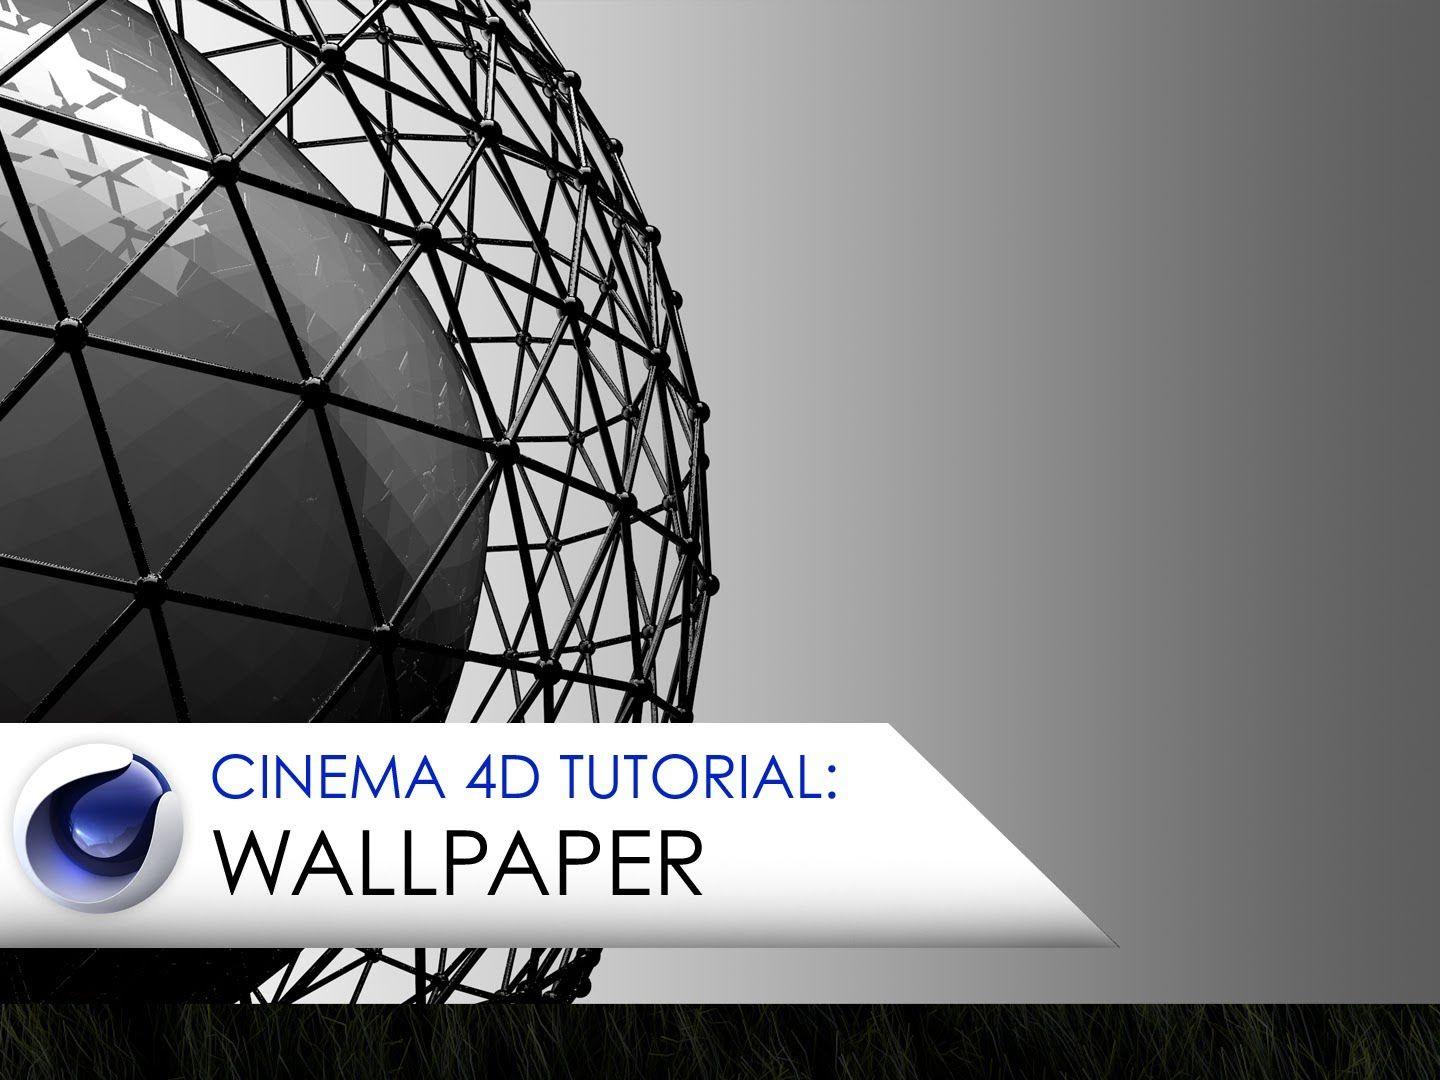 Cinema 4D wallpaper tutorial